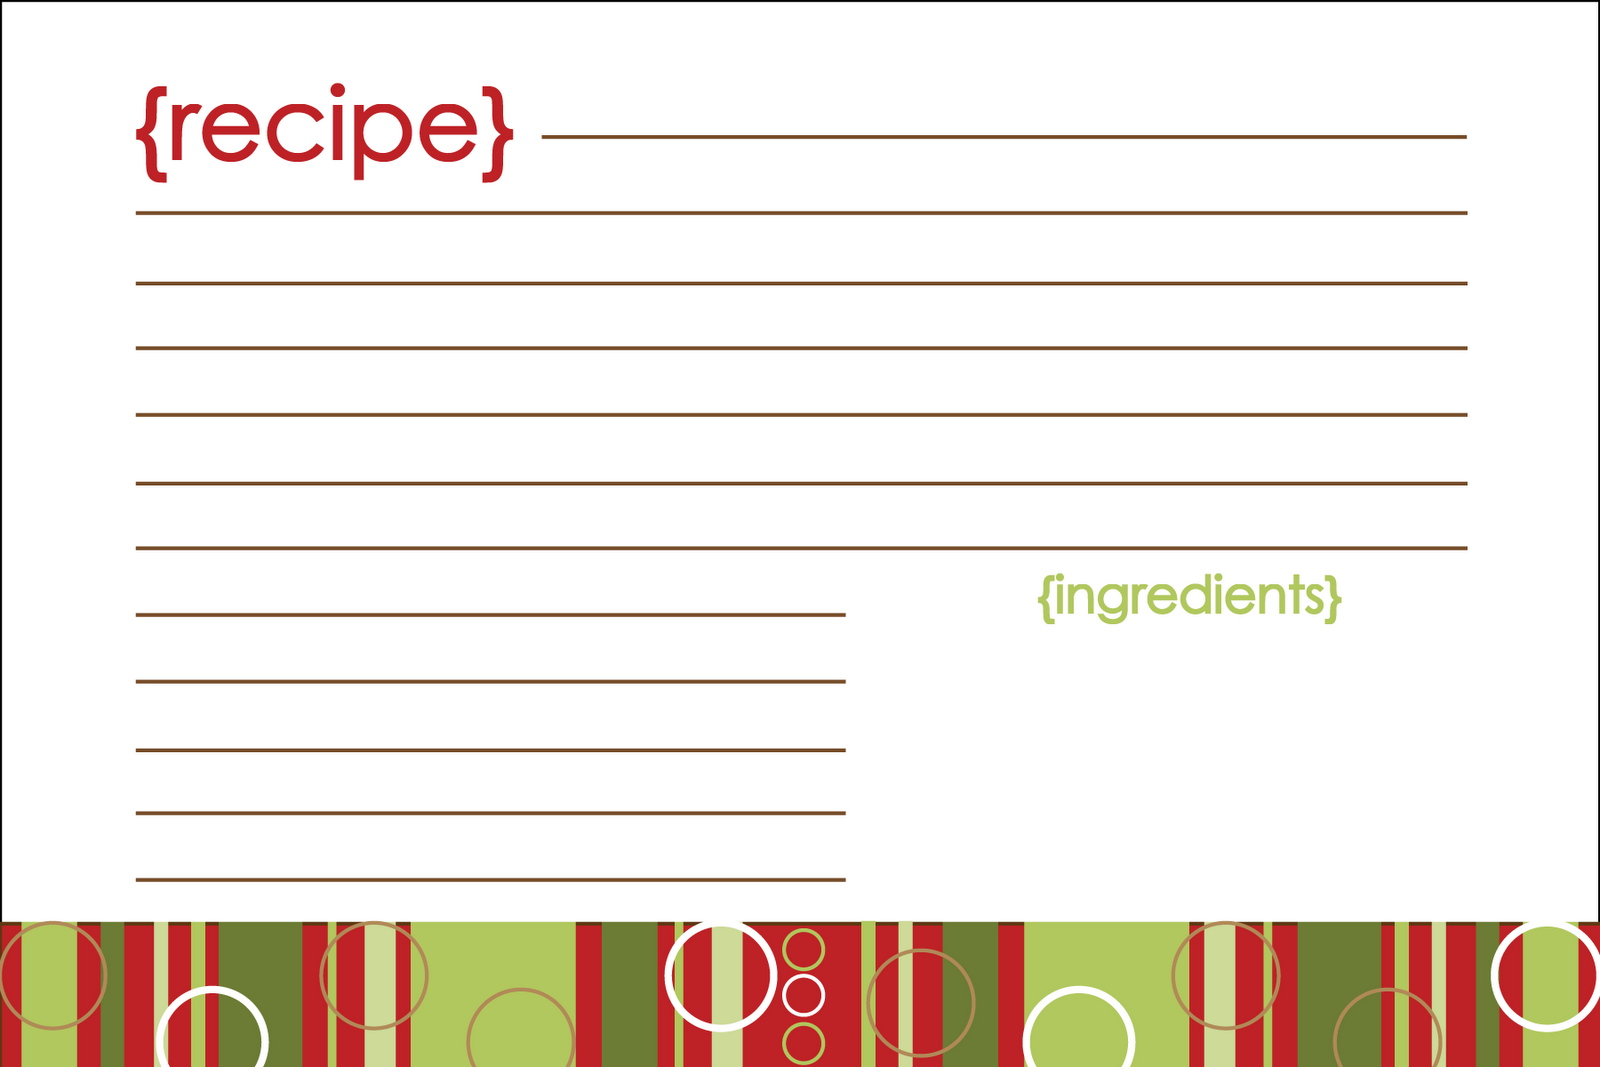 Free Downloadable Recipe Templates | Yglesiazssa.tk Intended For Free Recipe Card Templates For Microsoft Word